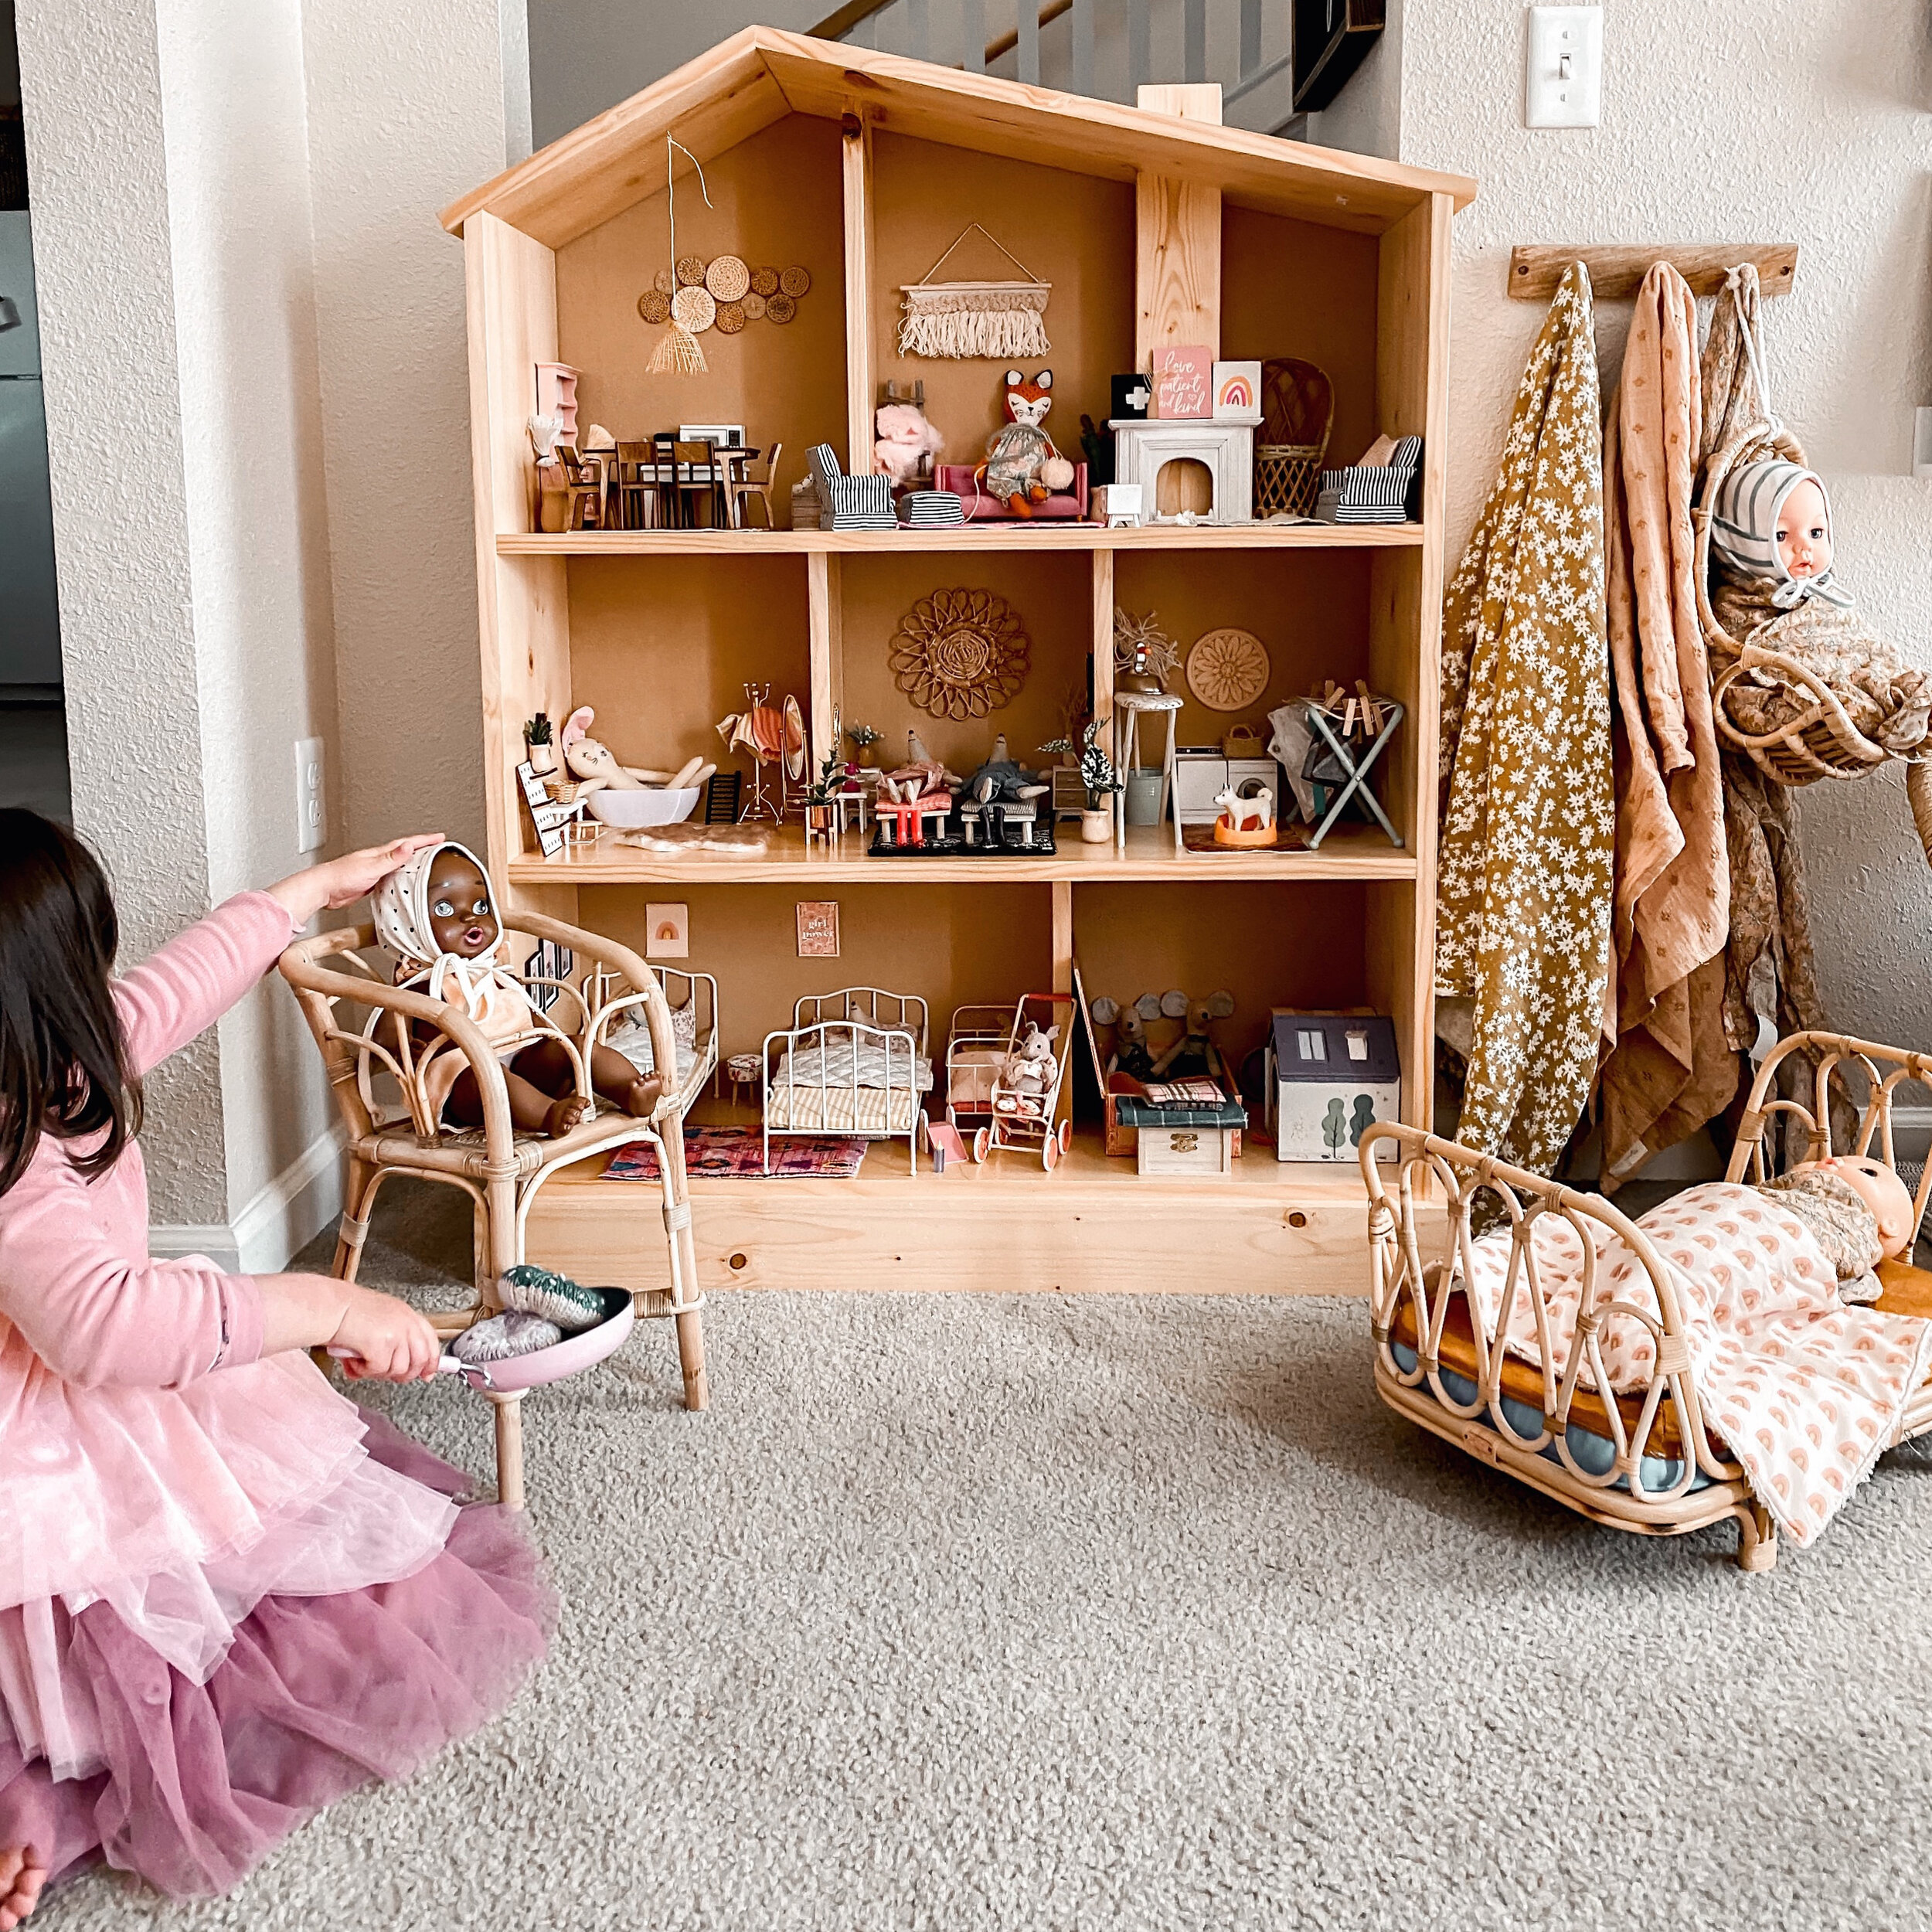 free doll house plans  Dolls house shop, Barbie doll house, Mini doll house